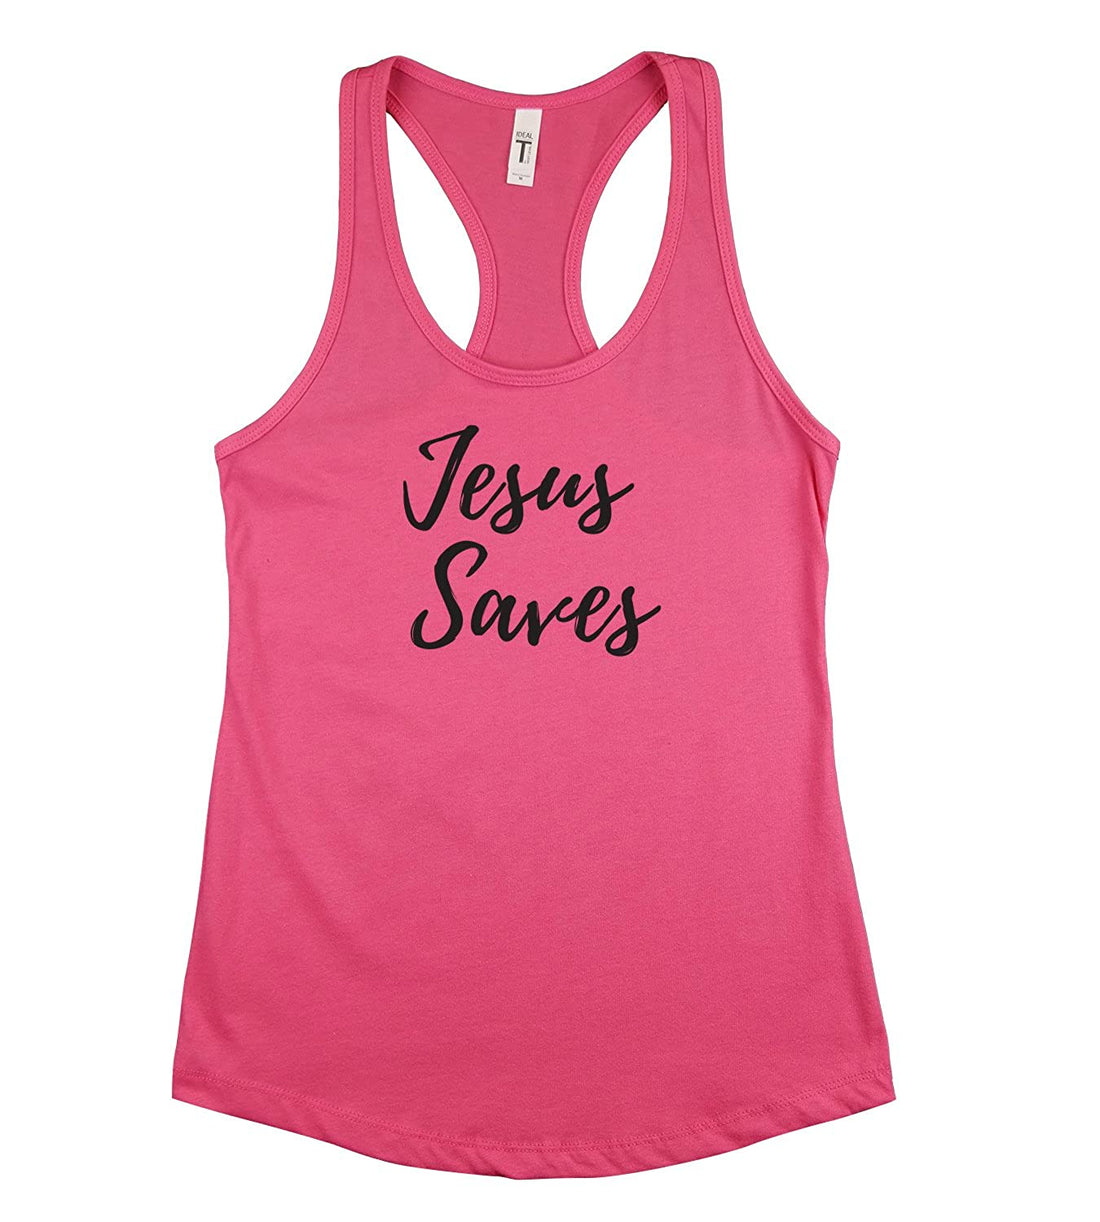 Trendy Apparel Shop Jesus Saves Printed Women's Racerback Funny Christian Tank Top